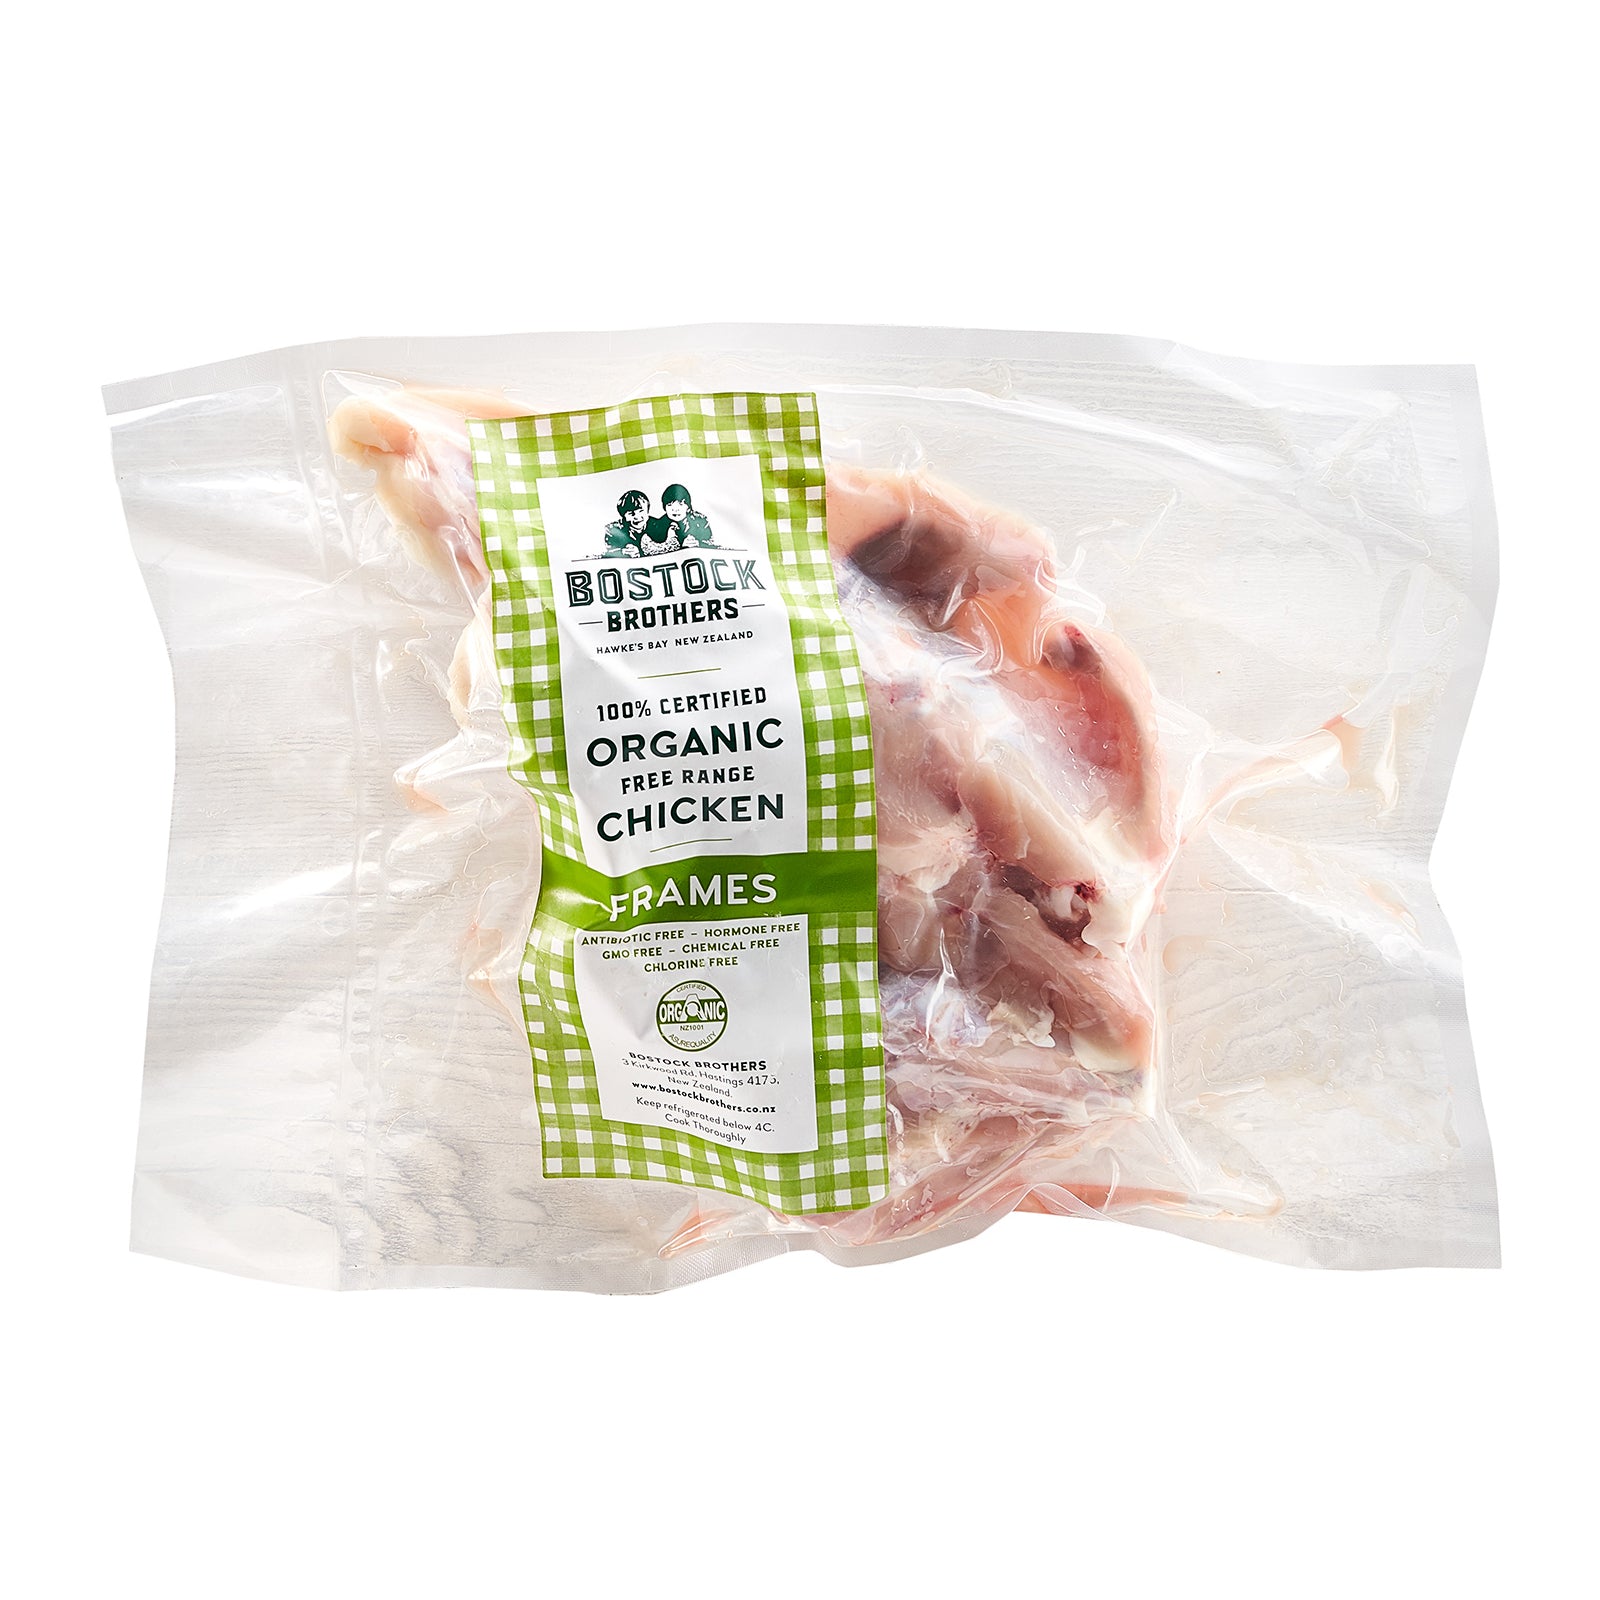 Certified Organic Free-Range Chicken Frames / Bones from New Zealand (500g) - Horizon Farms